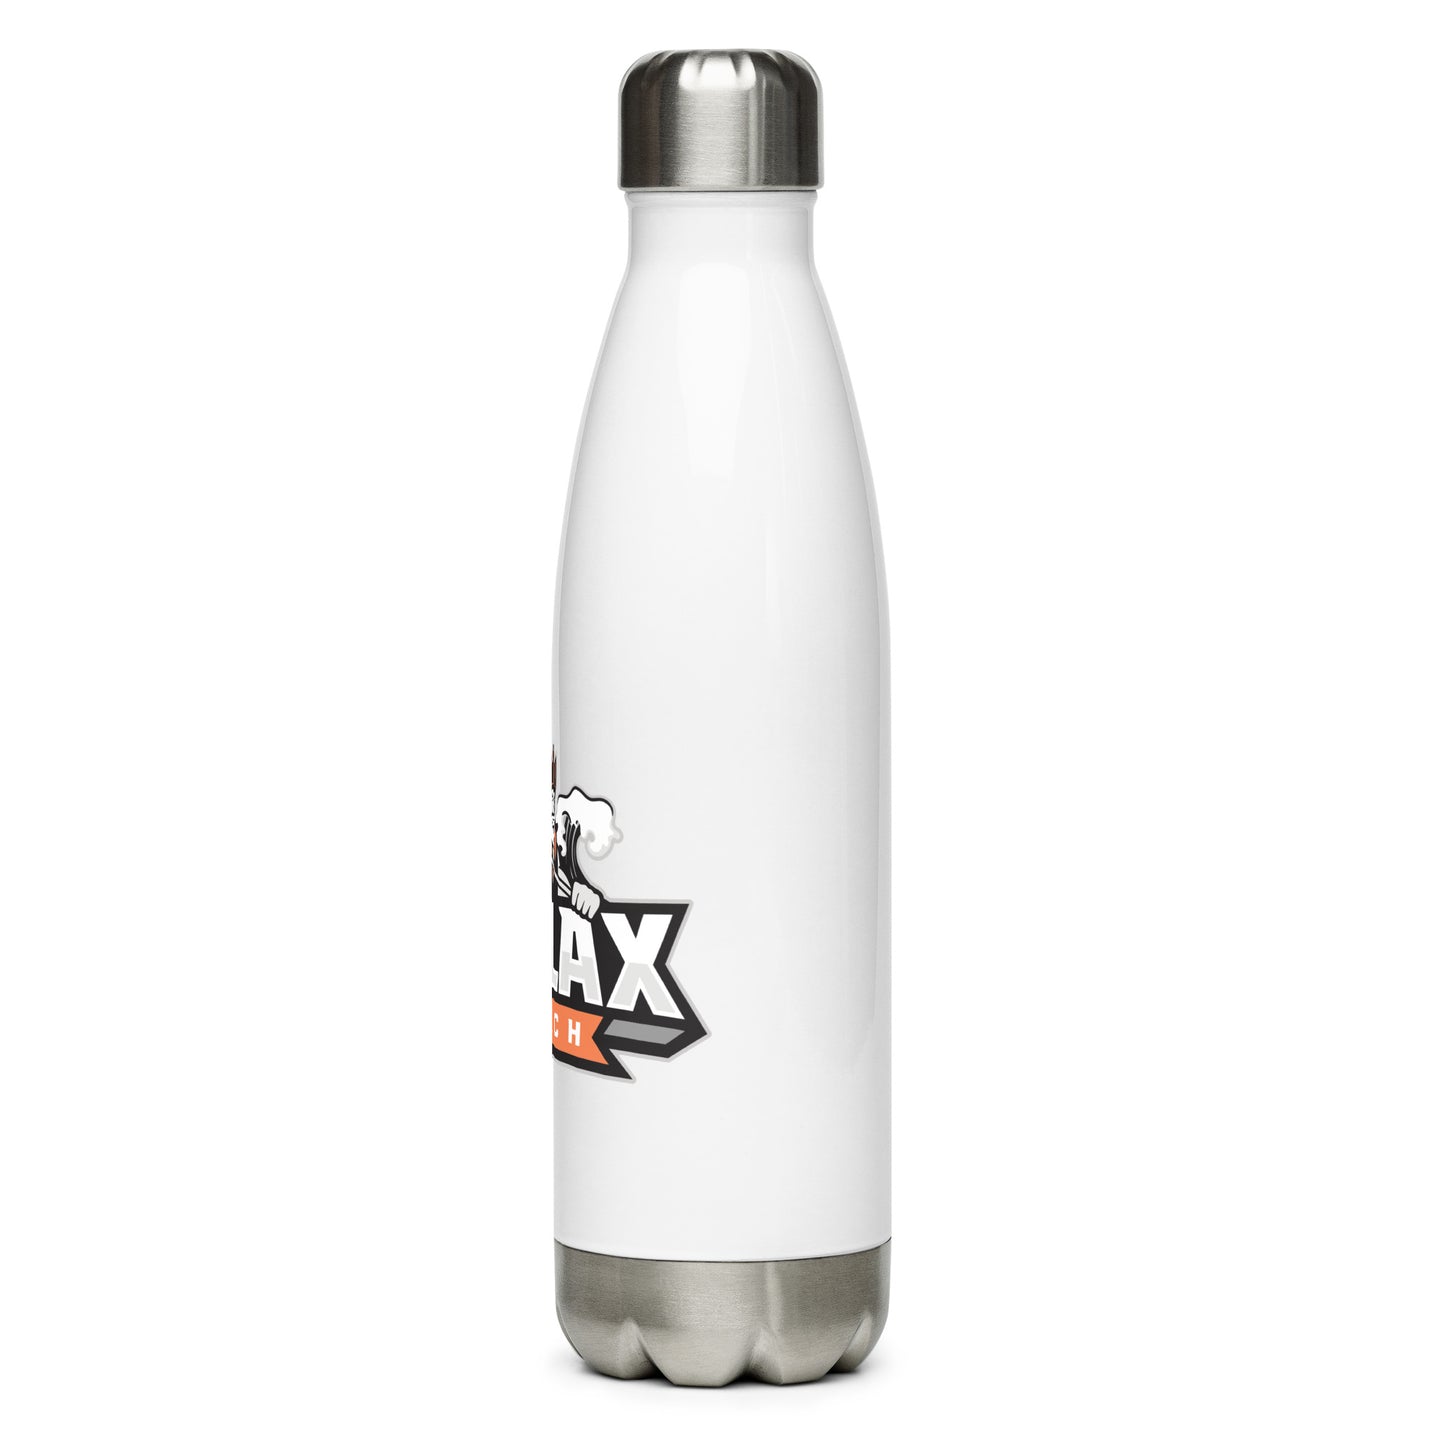 Jax Lax Beach - Stainless steel water bottle